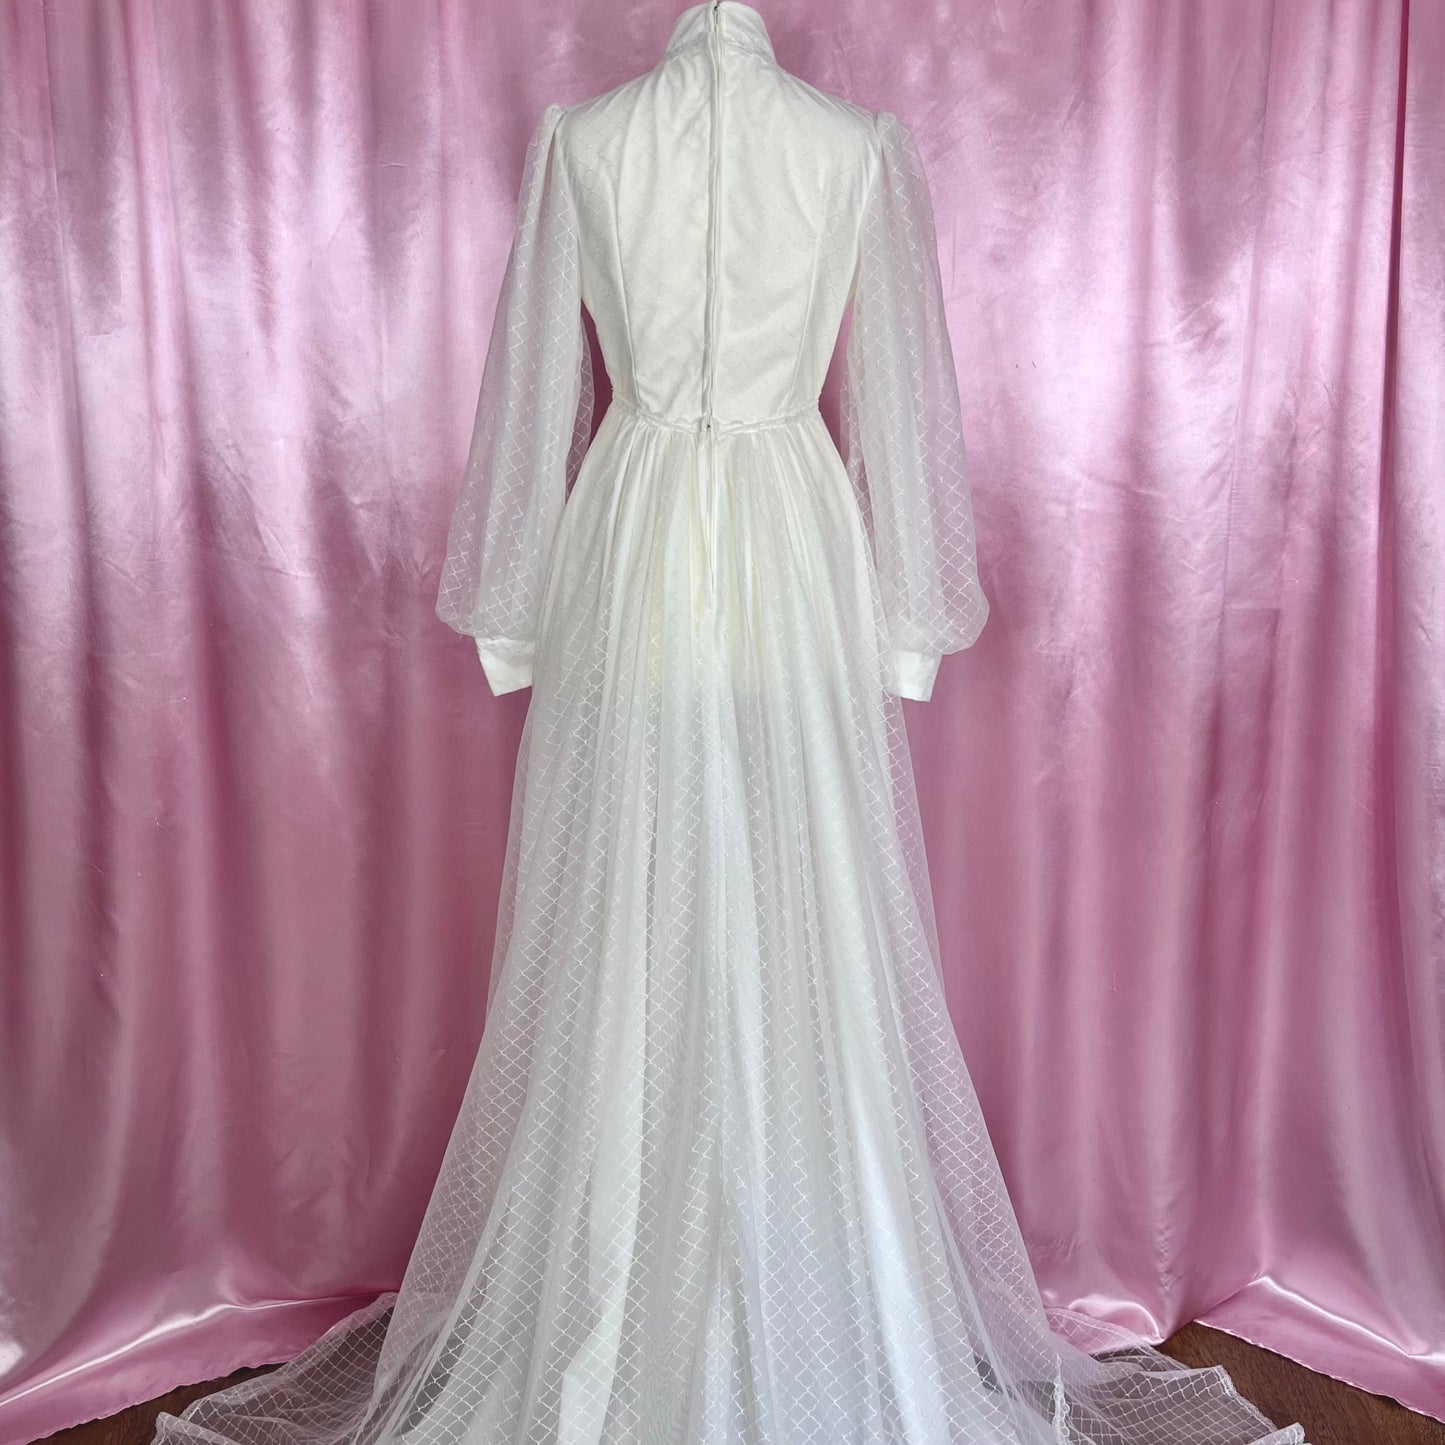 1960s White wedding dress with train, by Carina Jane, size 6